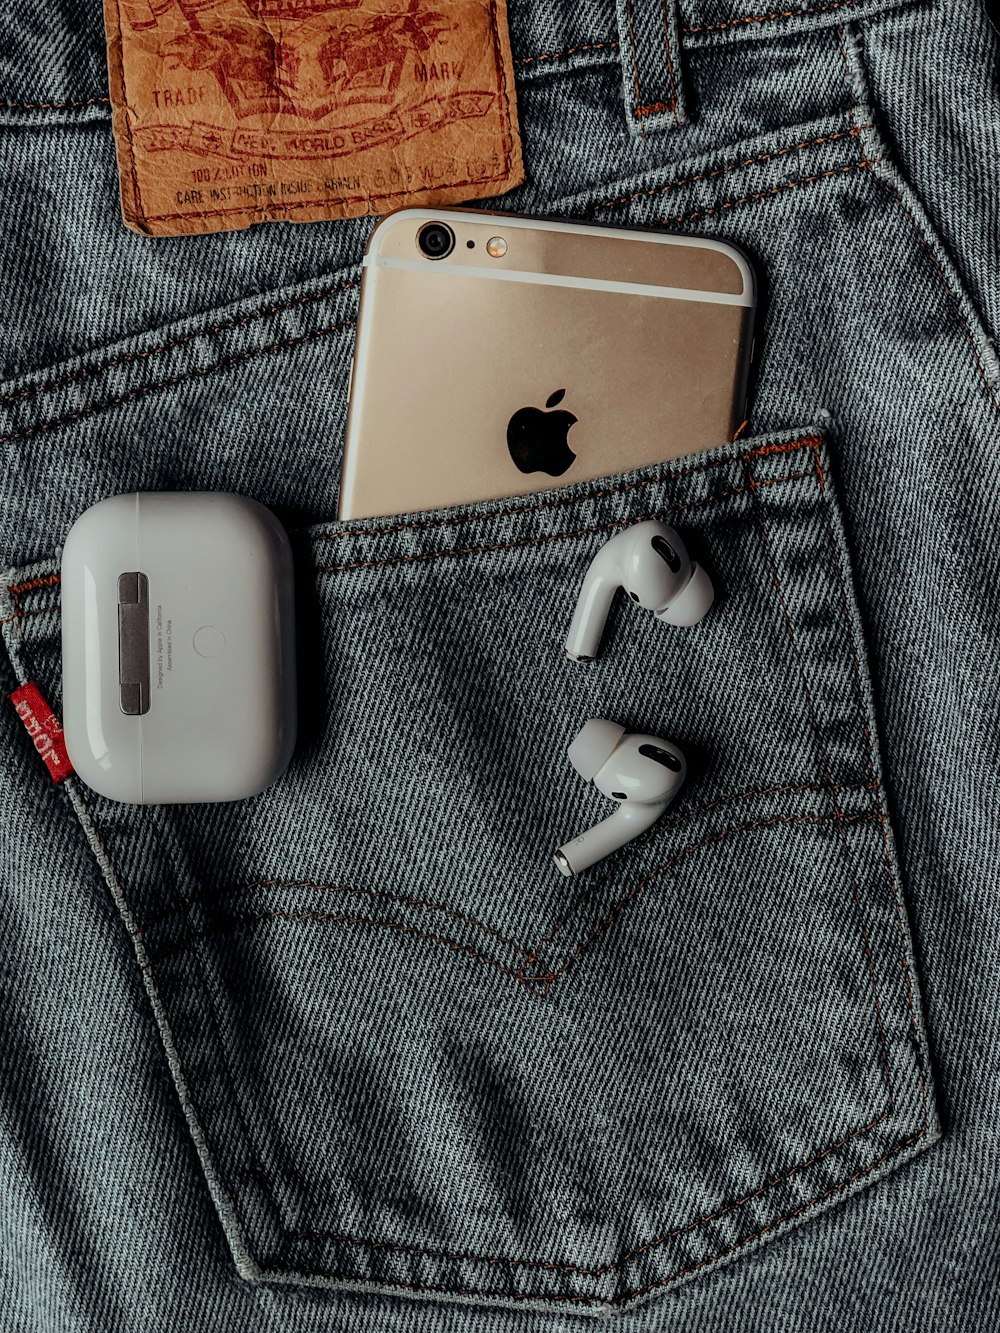 airpods maçã branca no iphone 6 prata